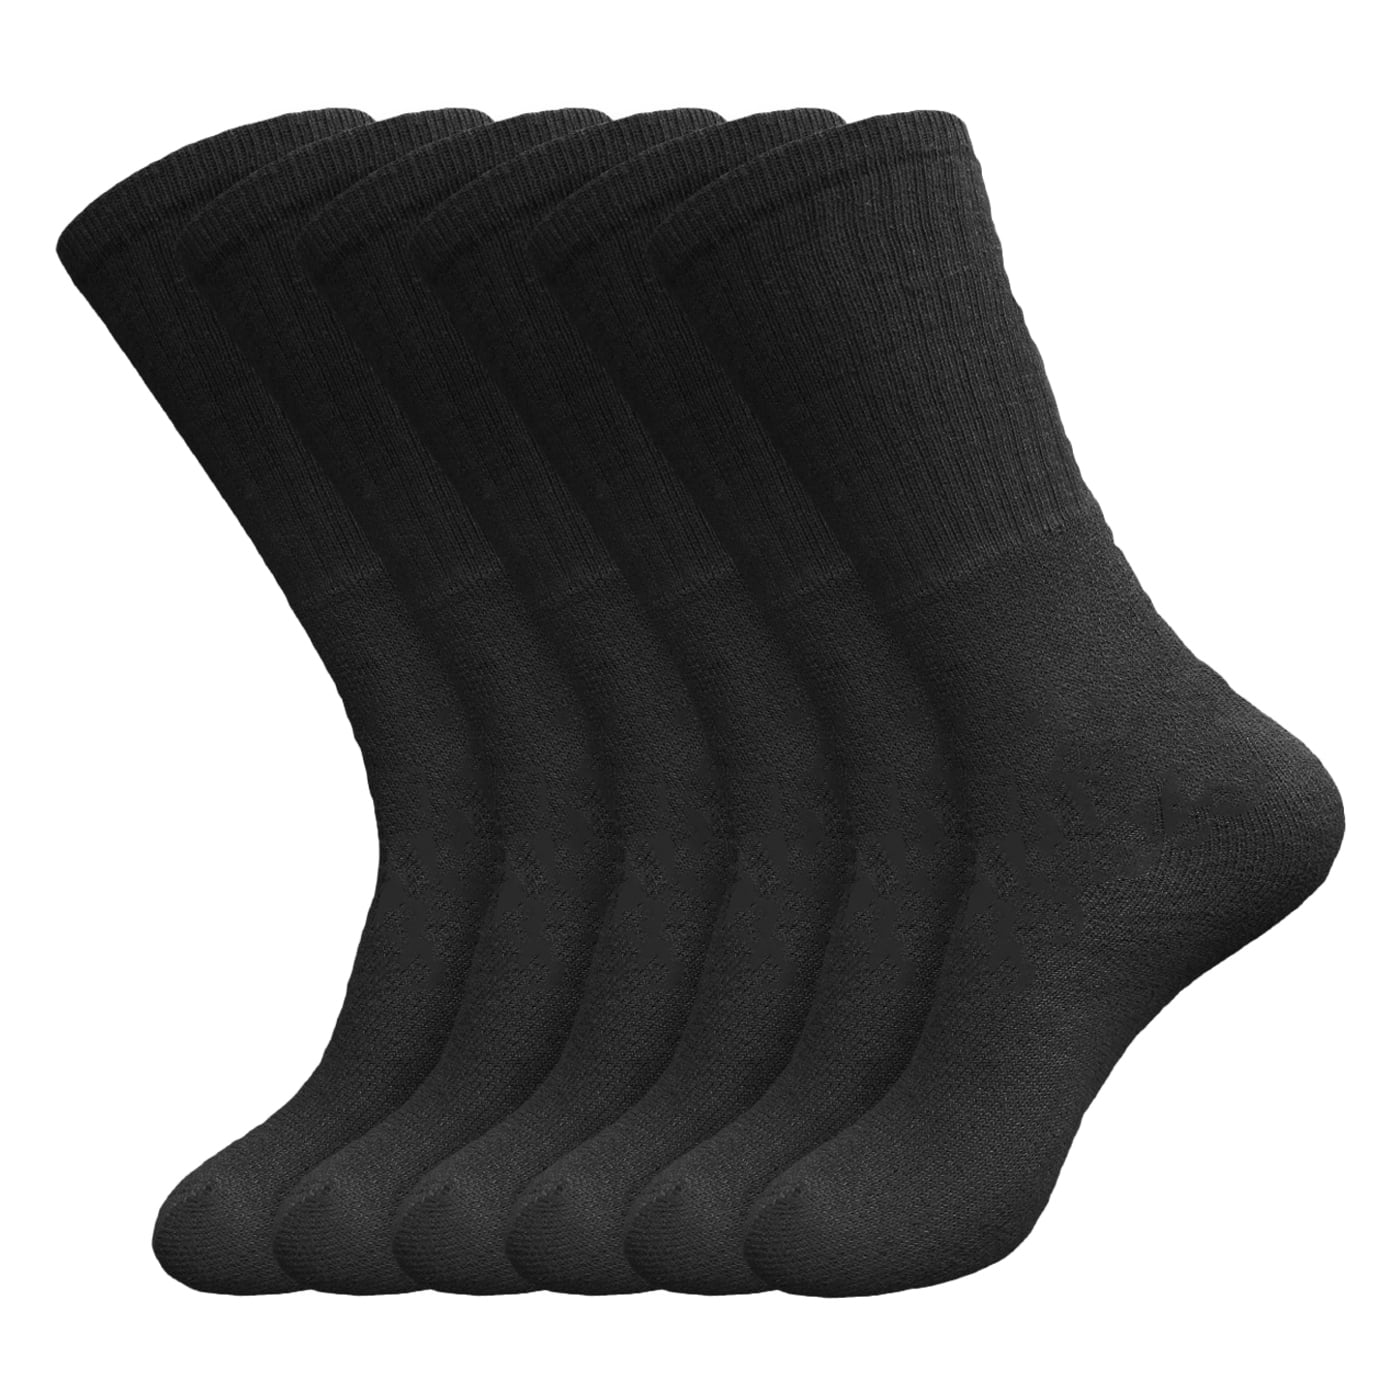 6 Pair Men's Cotton Crew Socks Pack - EVERLAST - Shoe Size 6-12 ...